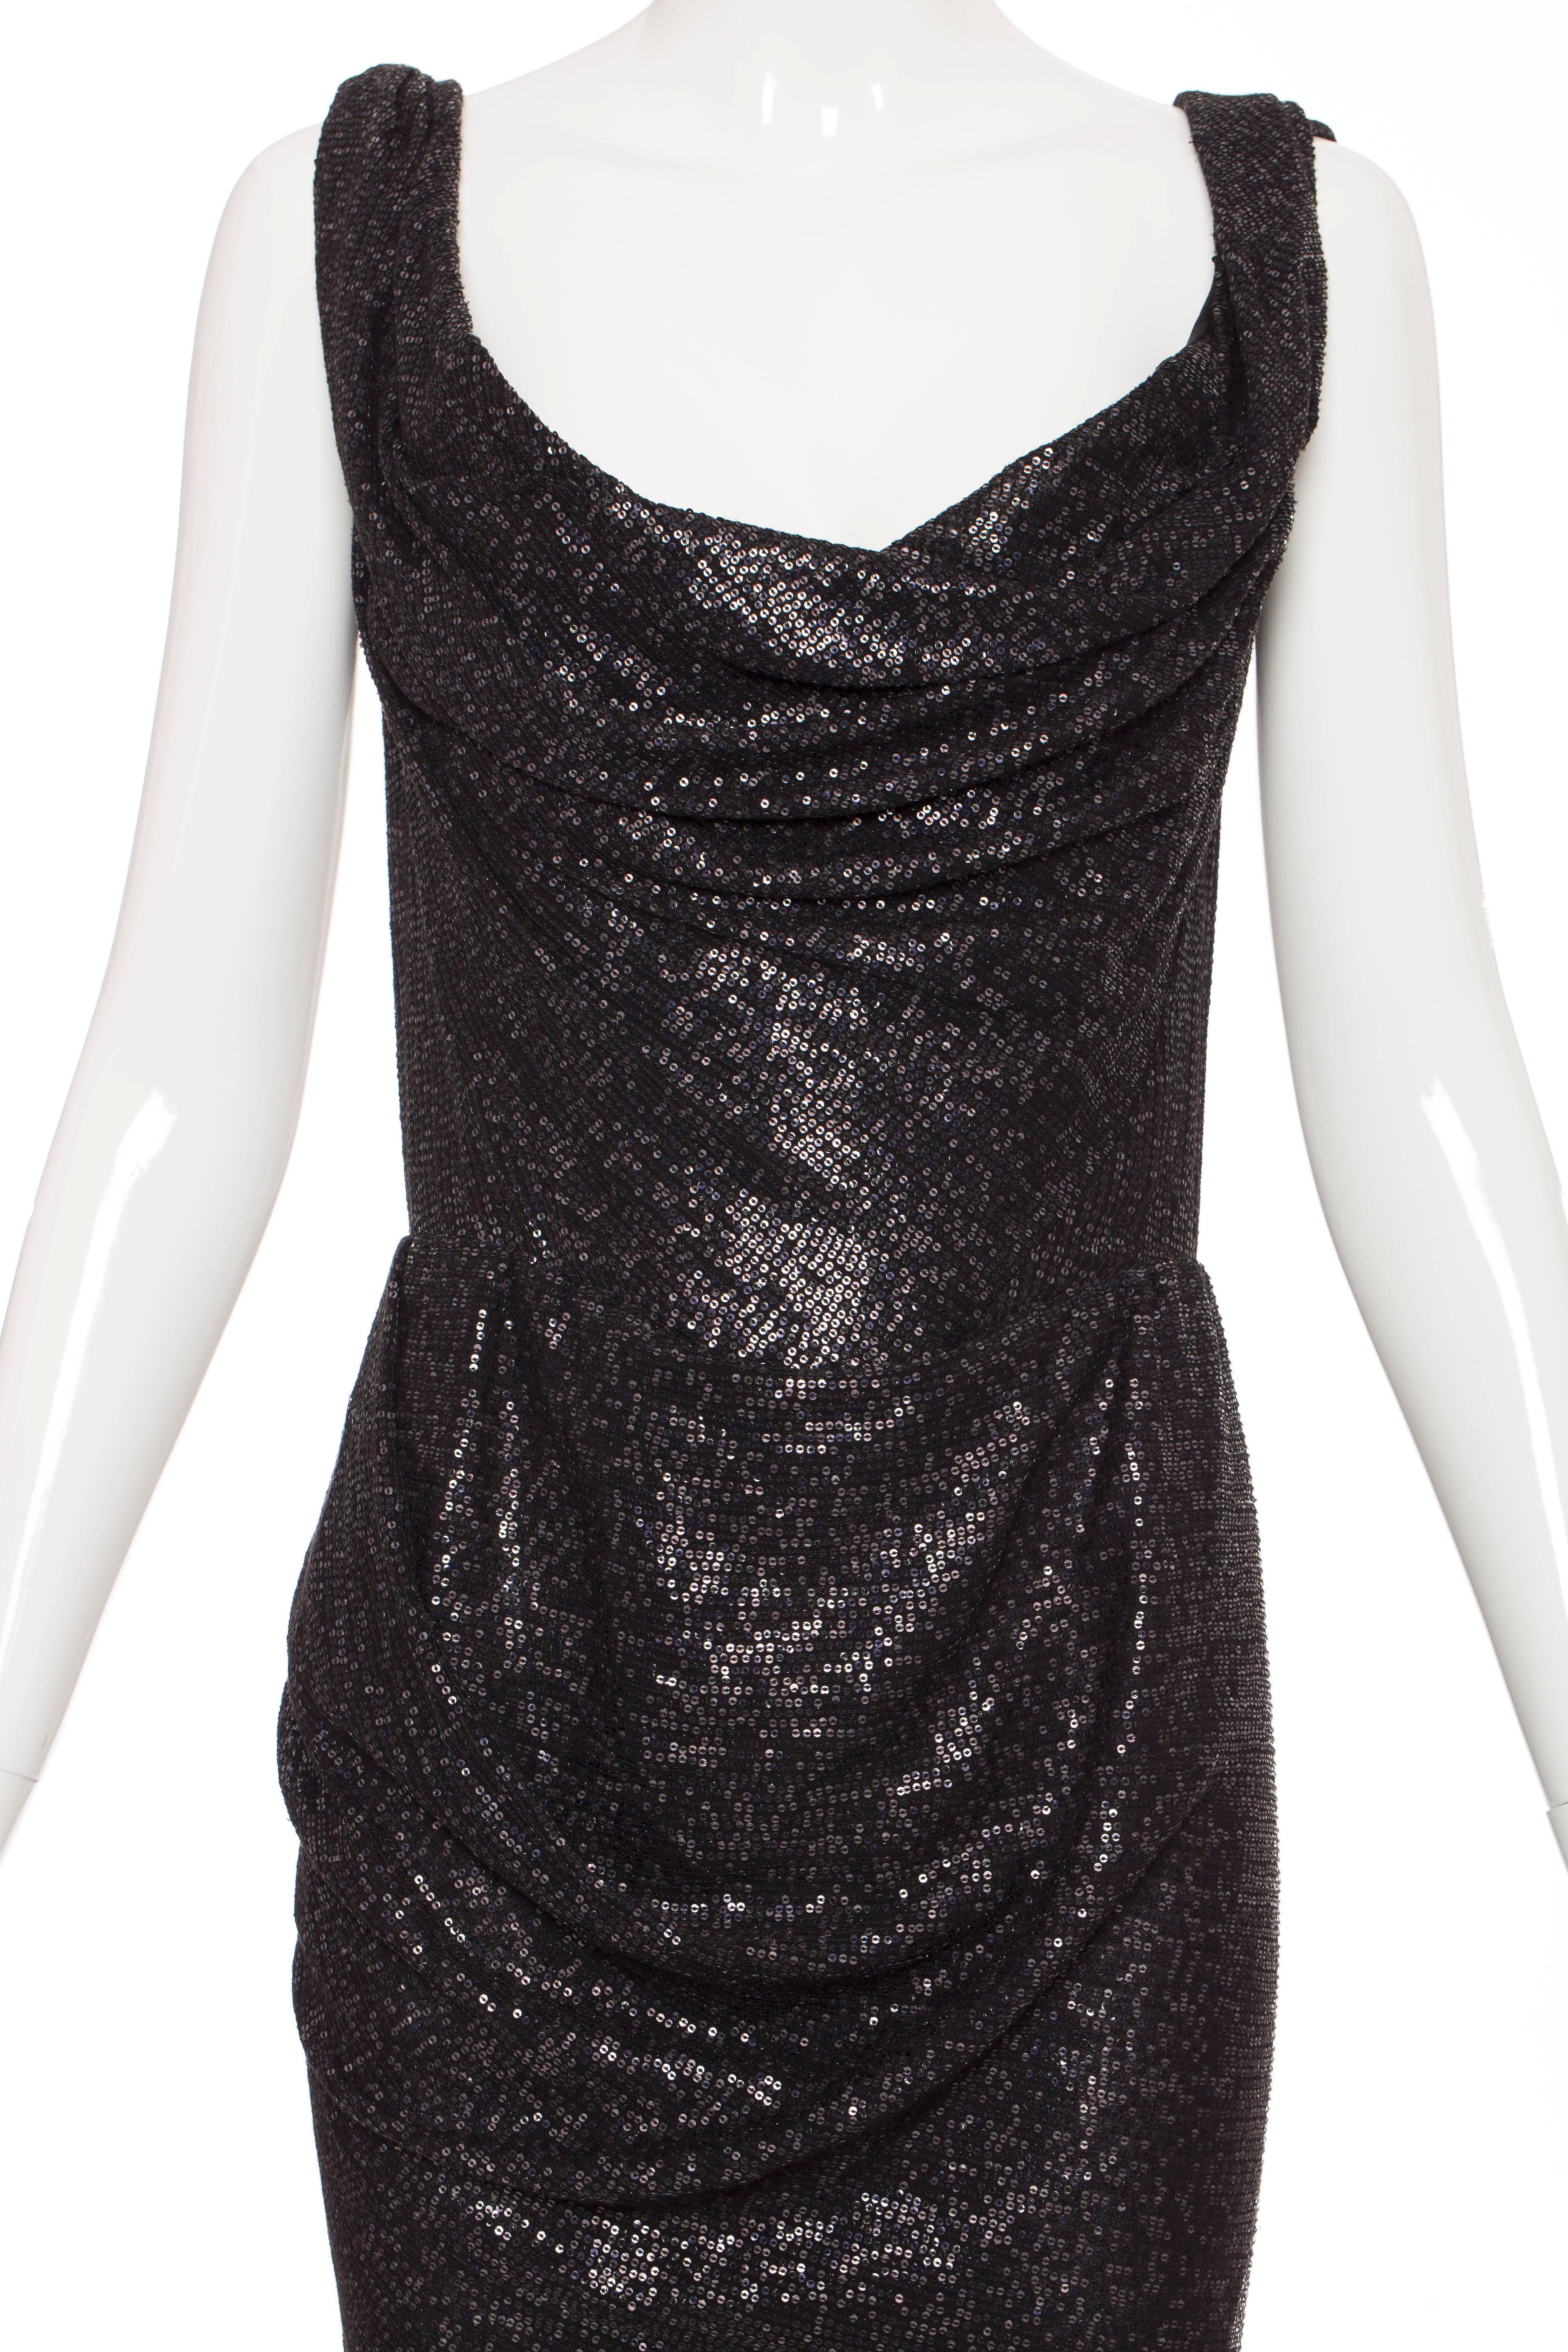 Vivienne Westwood Gold Label Black Sequined Evening Dress, Autumn - Winter 2011 2